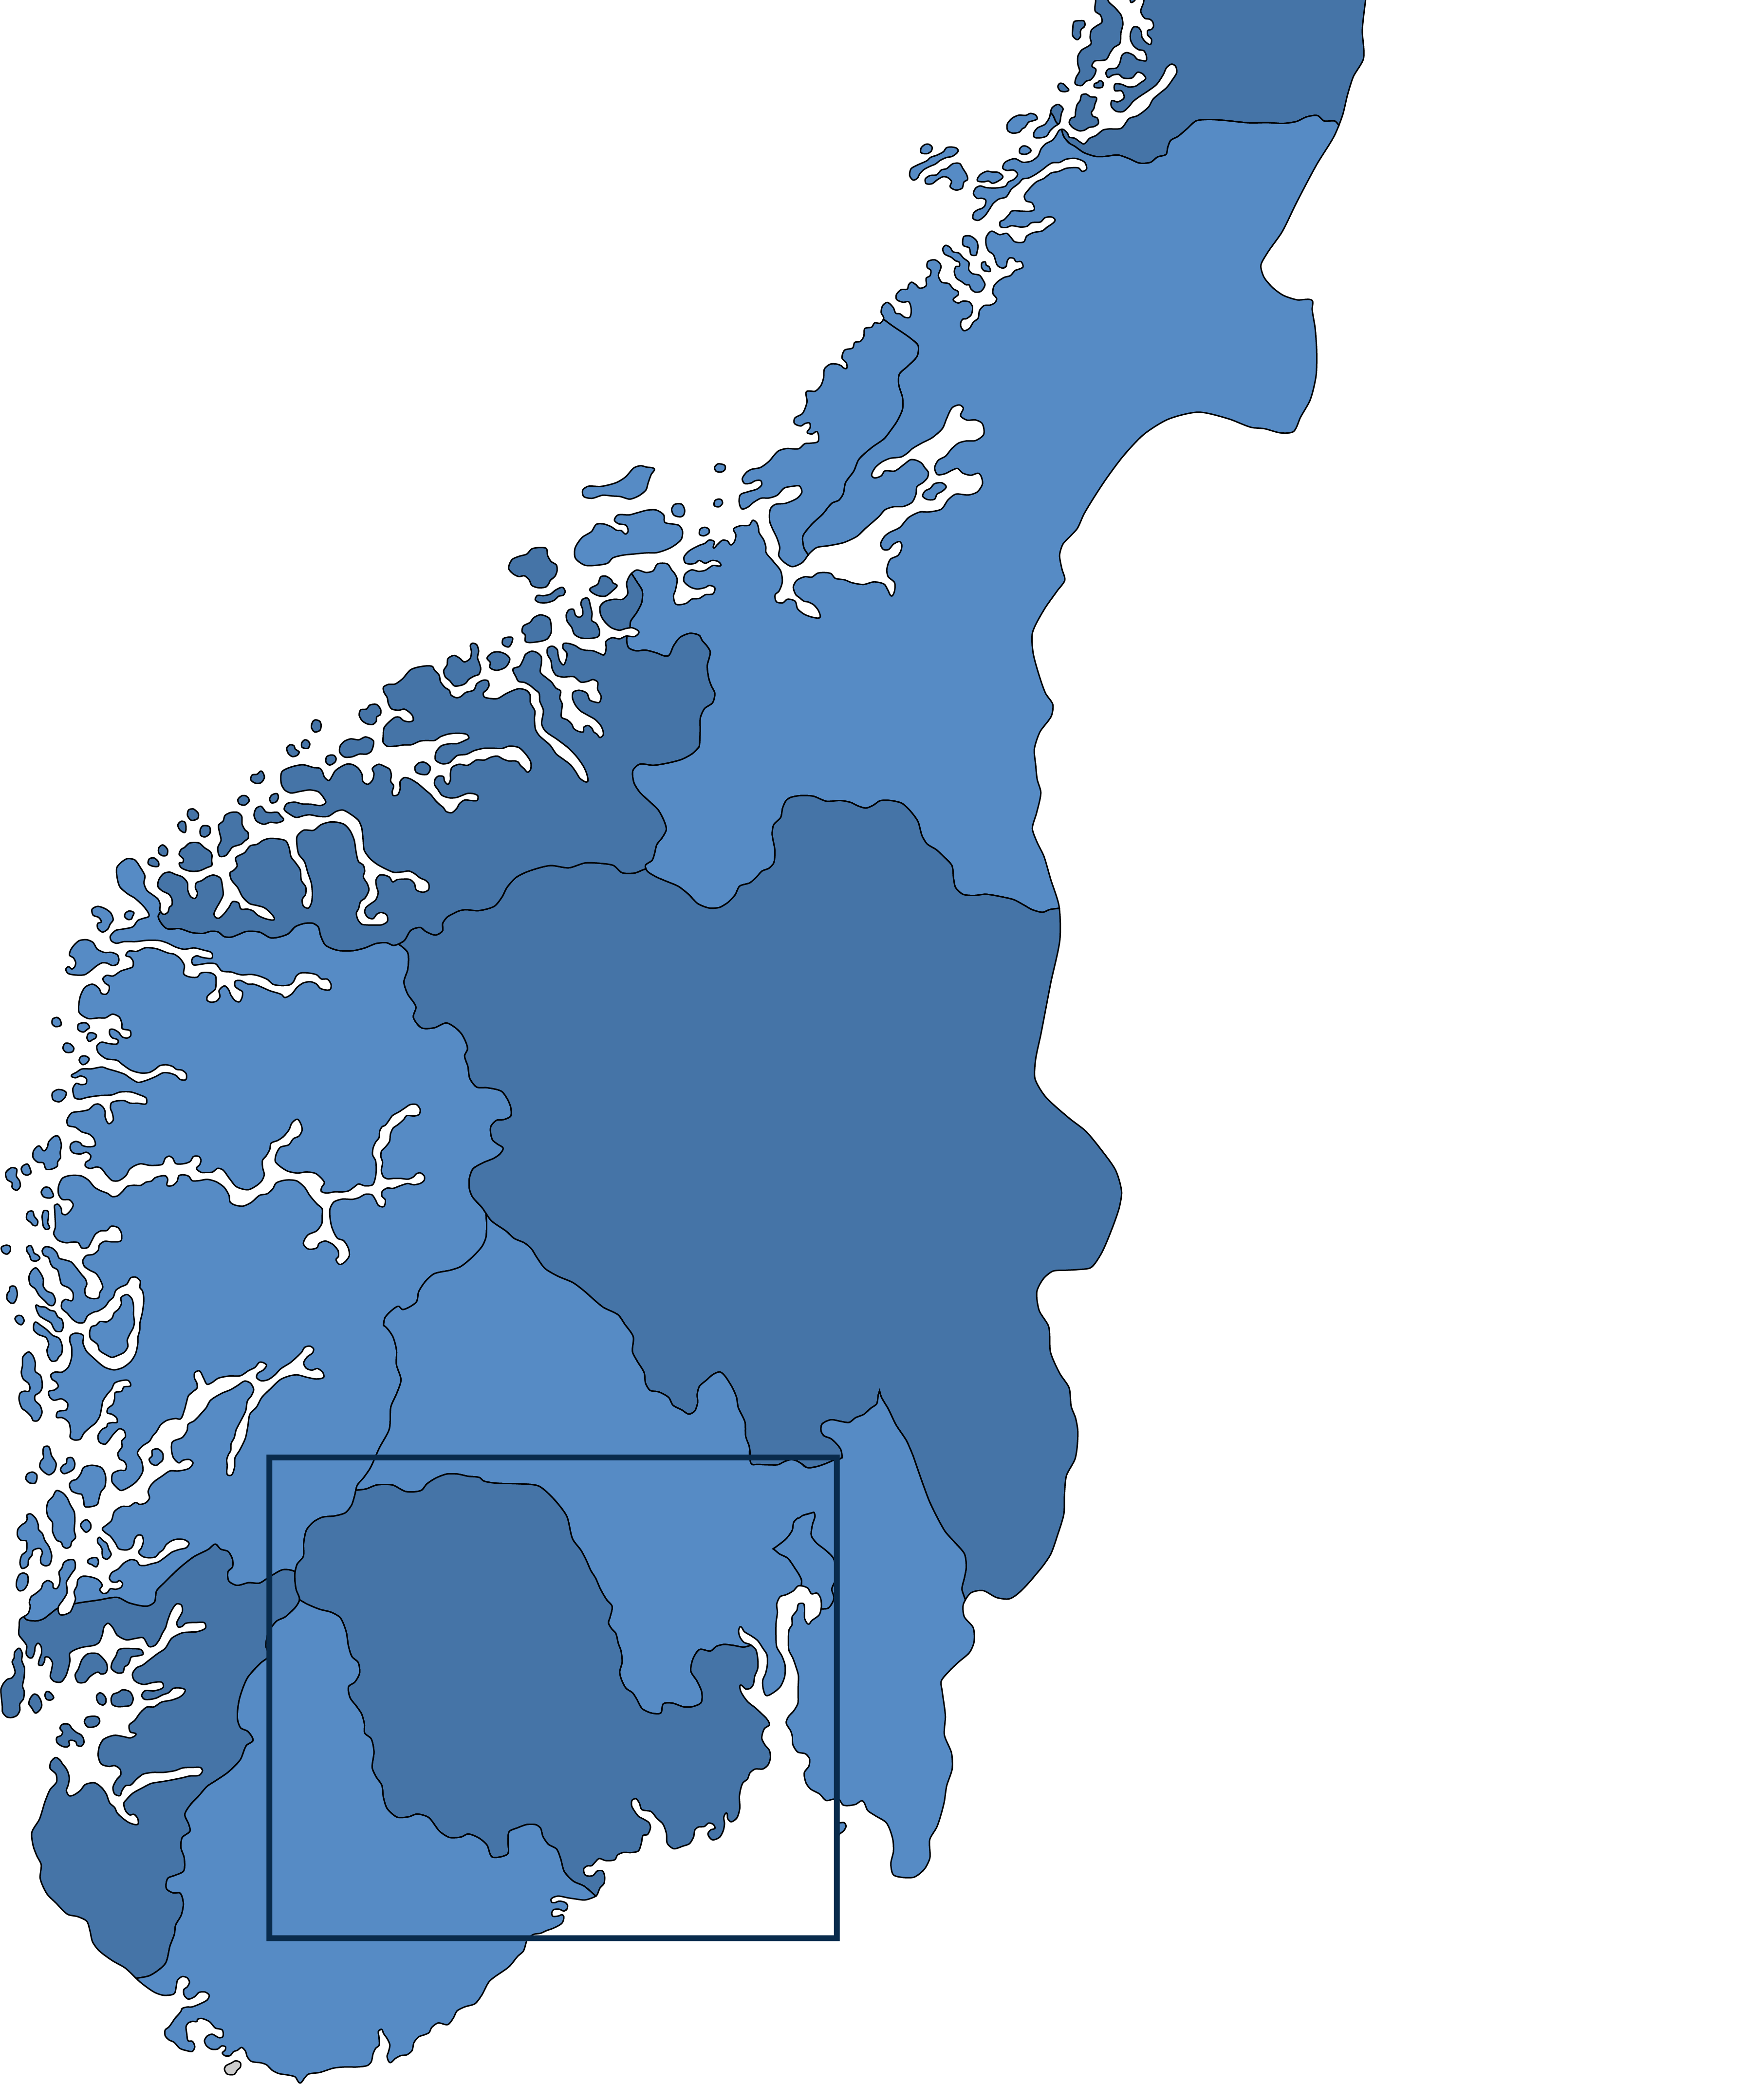 norges kart1